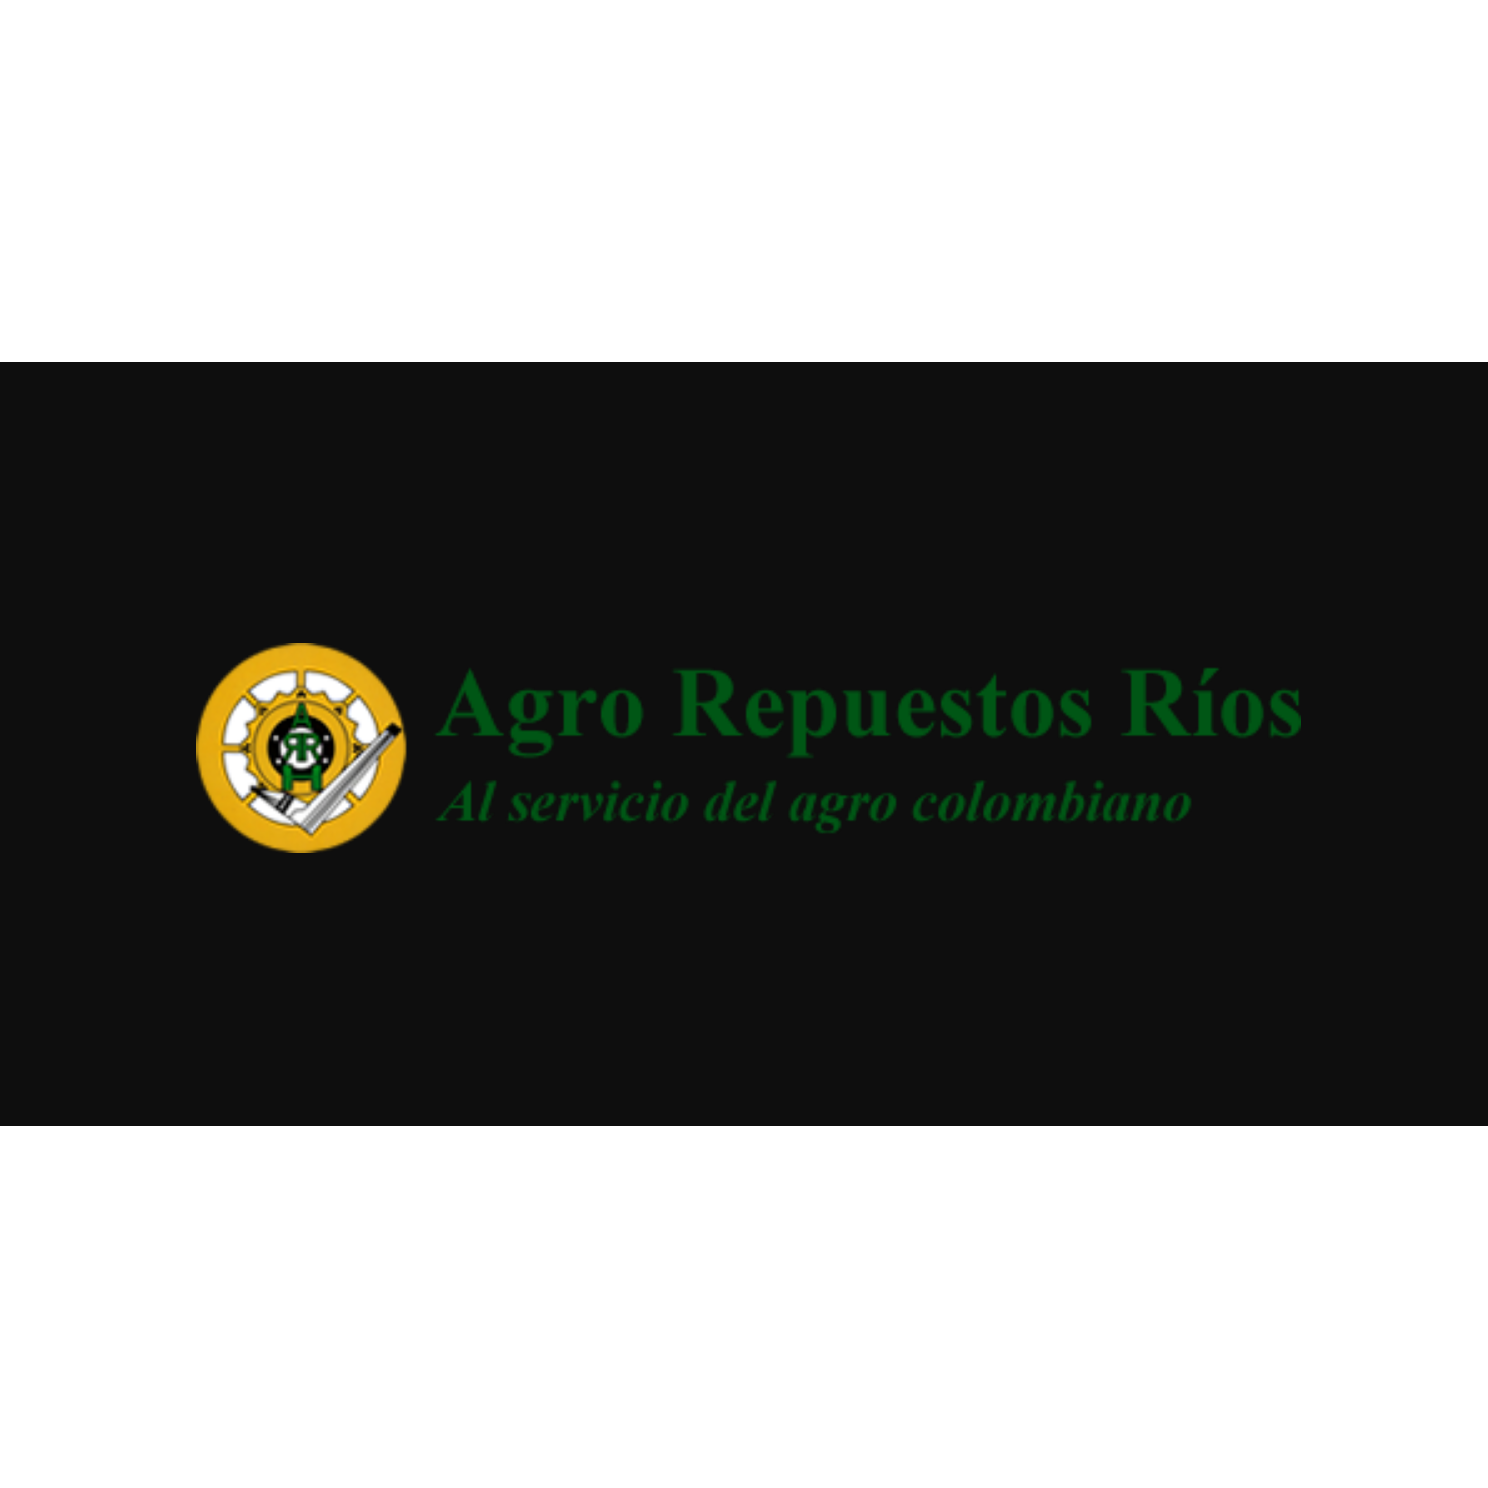 Agro-Repuestos Ríos - Industrial Equipment Supplier - Palmira - 315 4914206 Colombia | ShowMeLocal.com